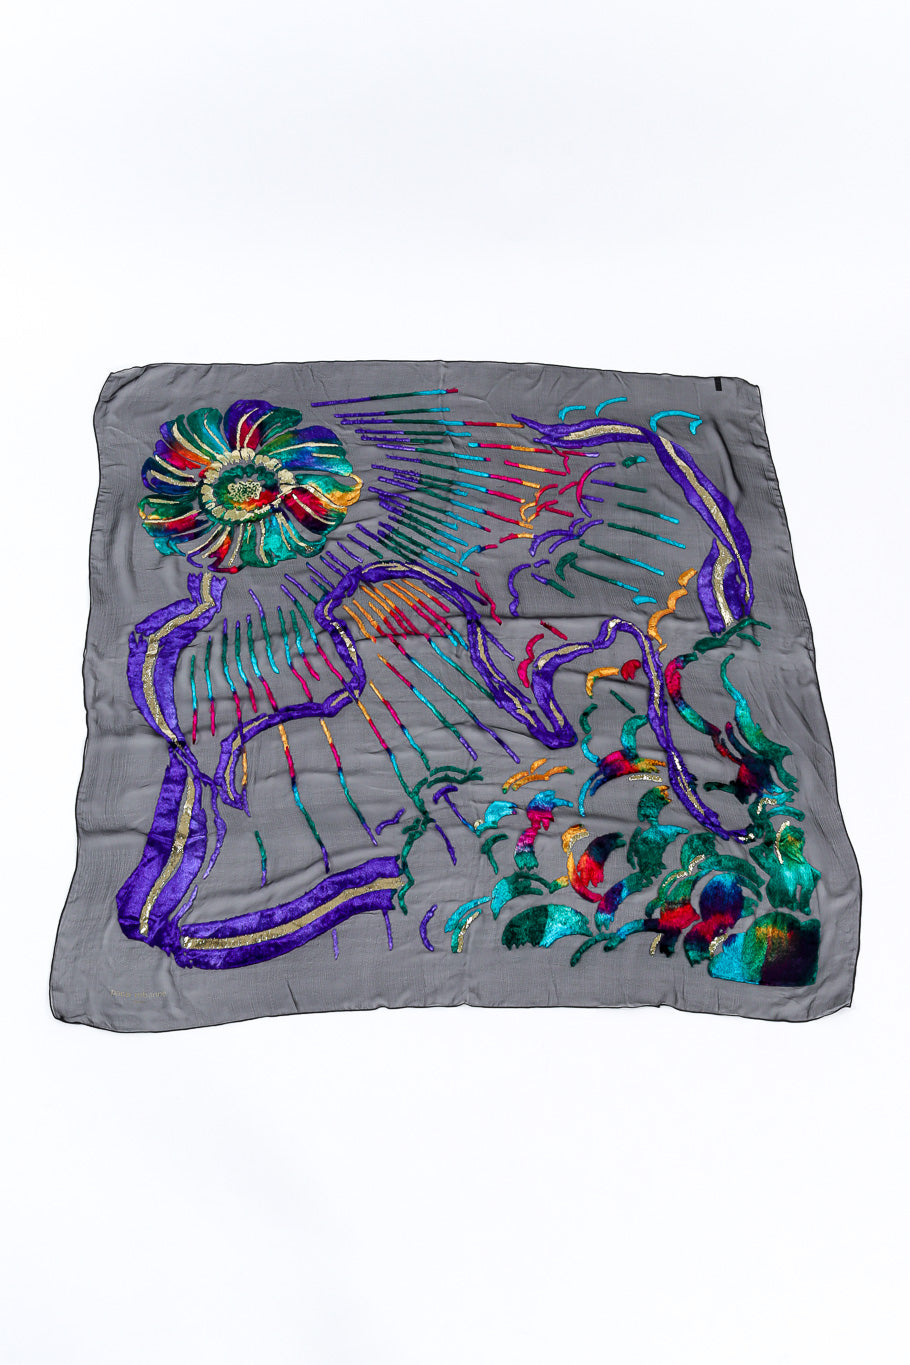 Jewel tone velvet scarf by Paco Rabanne flat lay full @recessla